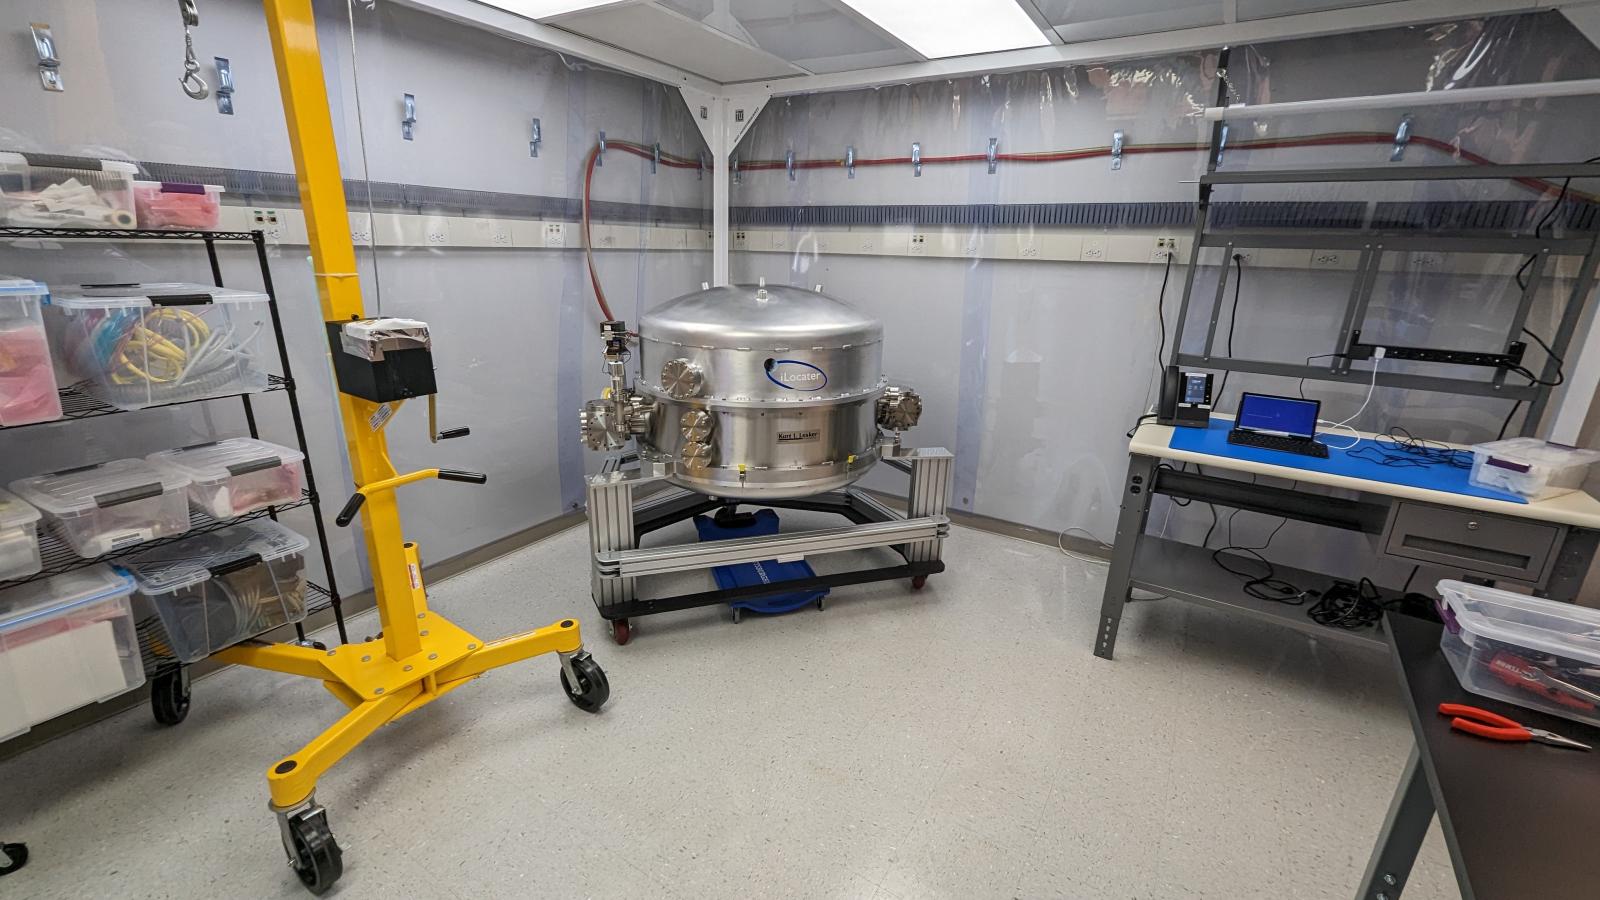 The iLocater cryostat inside the cleanroom facility at OSU